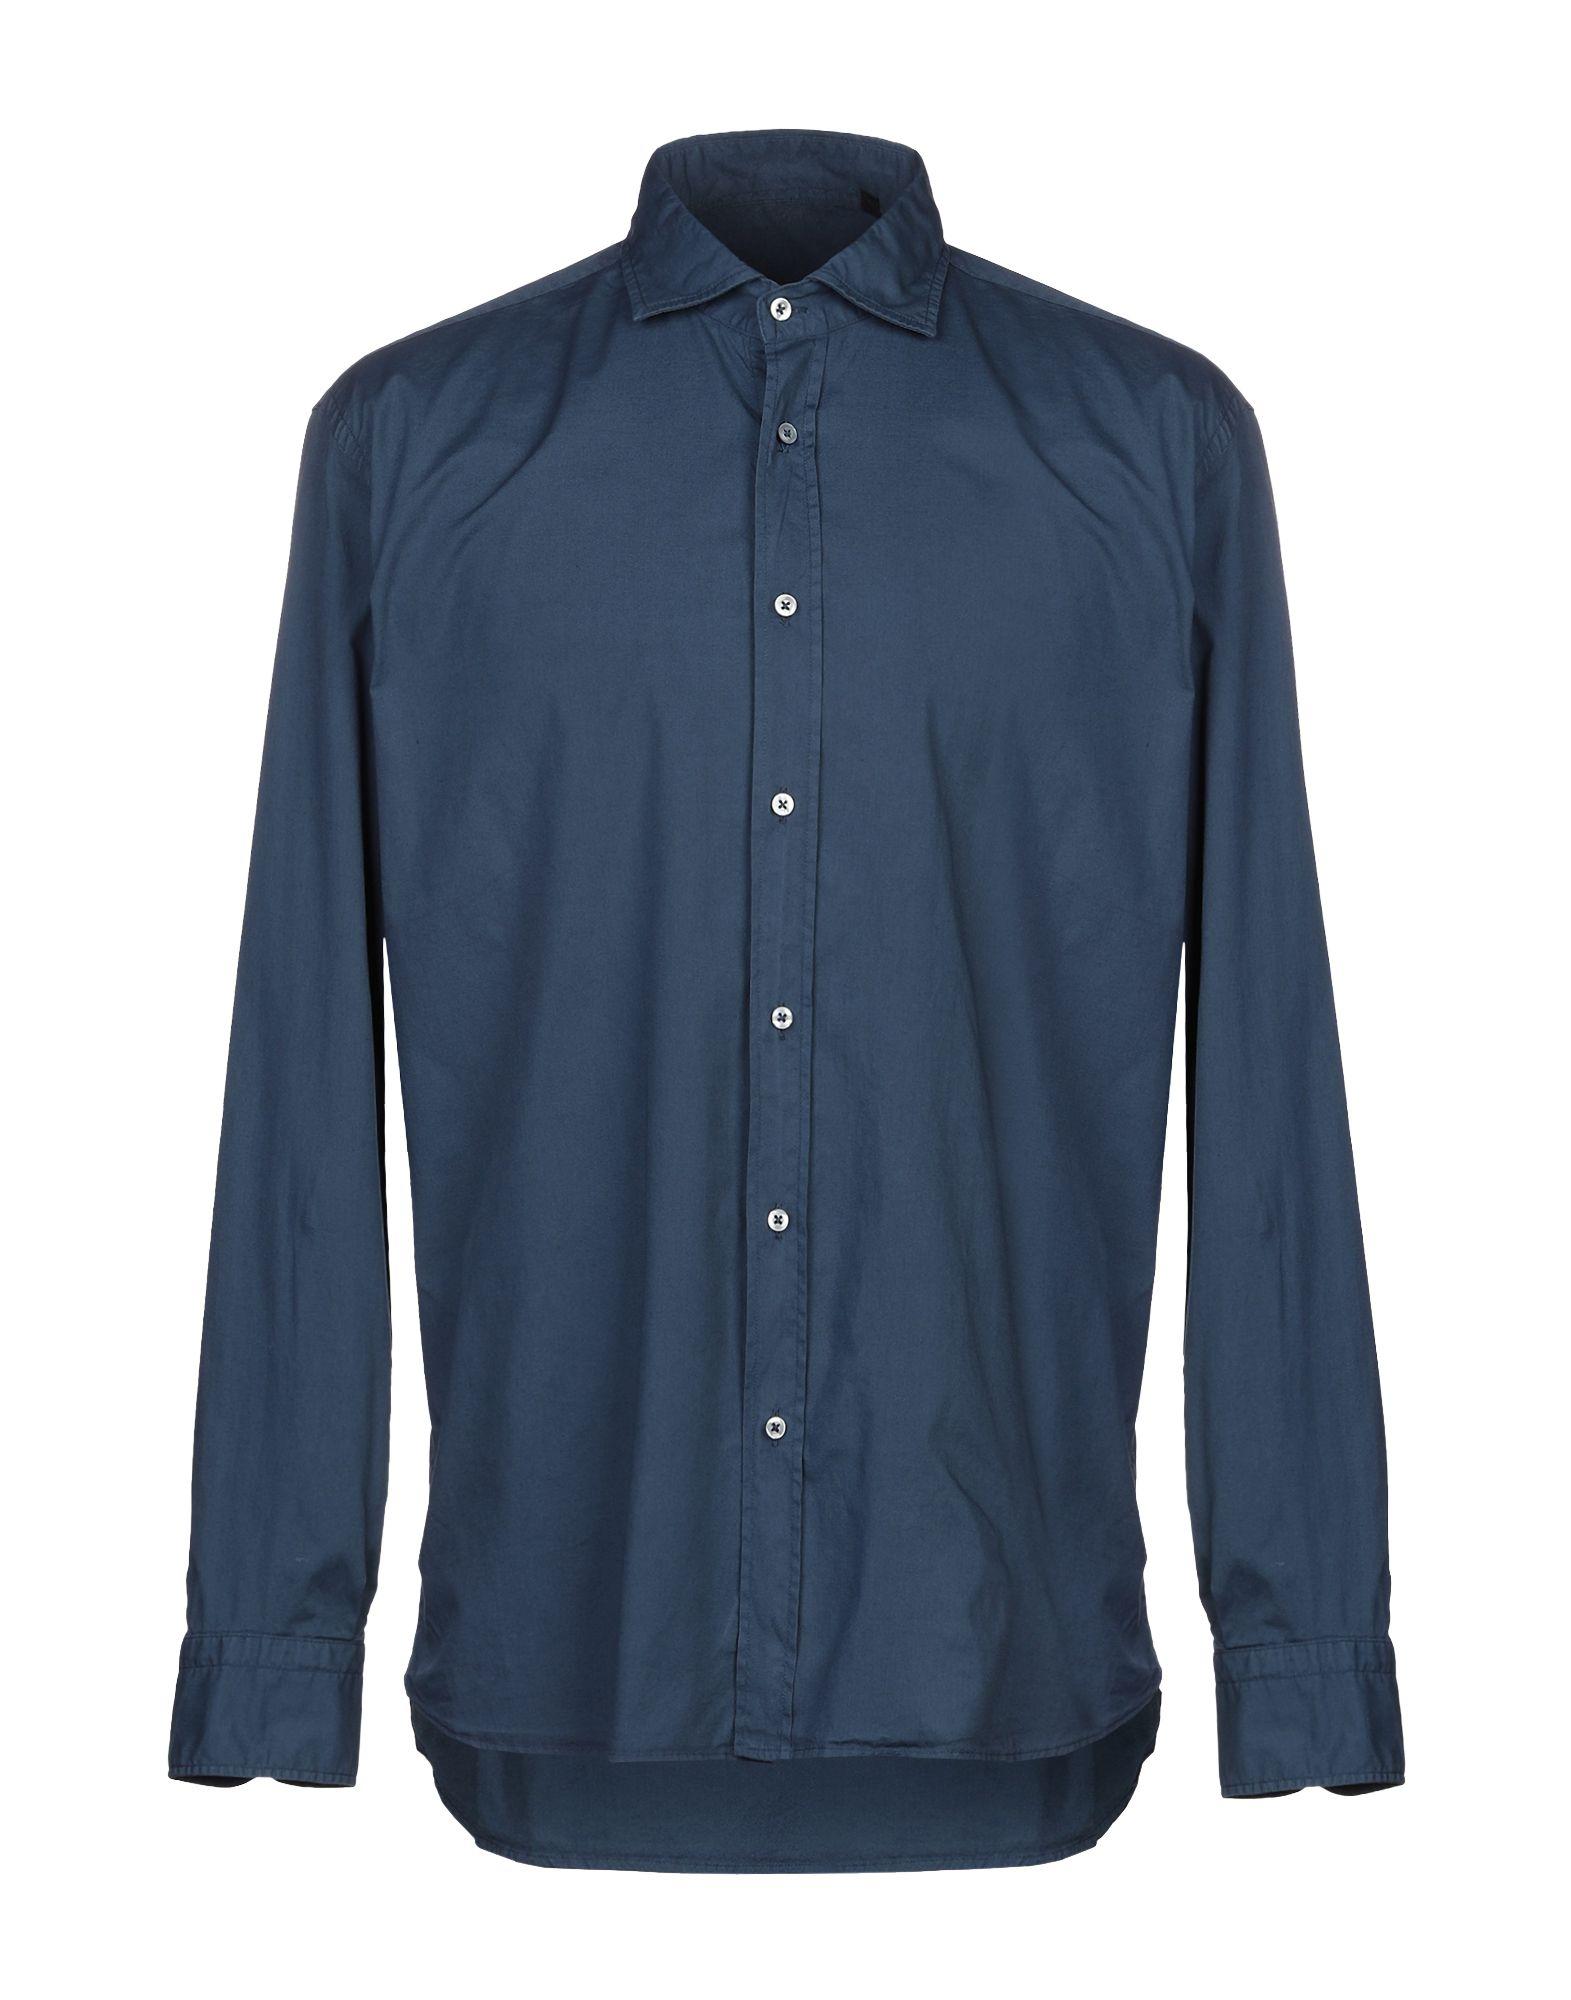 Historic Cotton Shirt in Dark Blue (Blue) for Men - Lyst